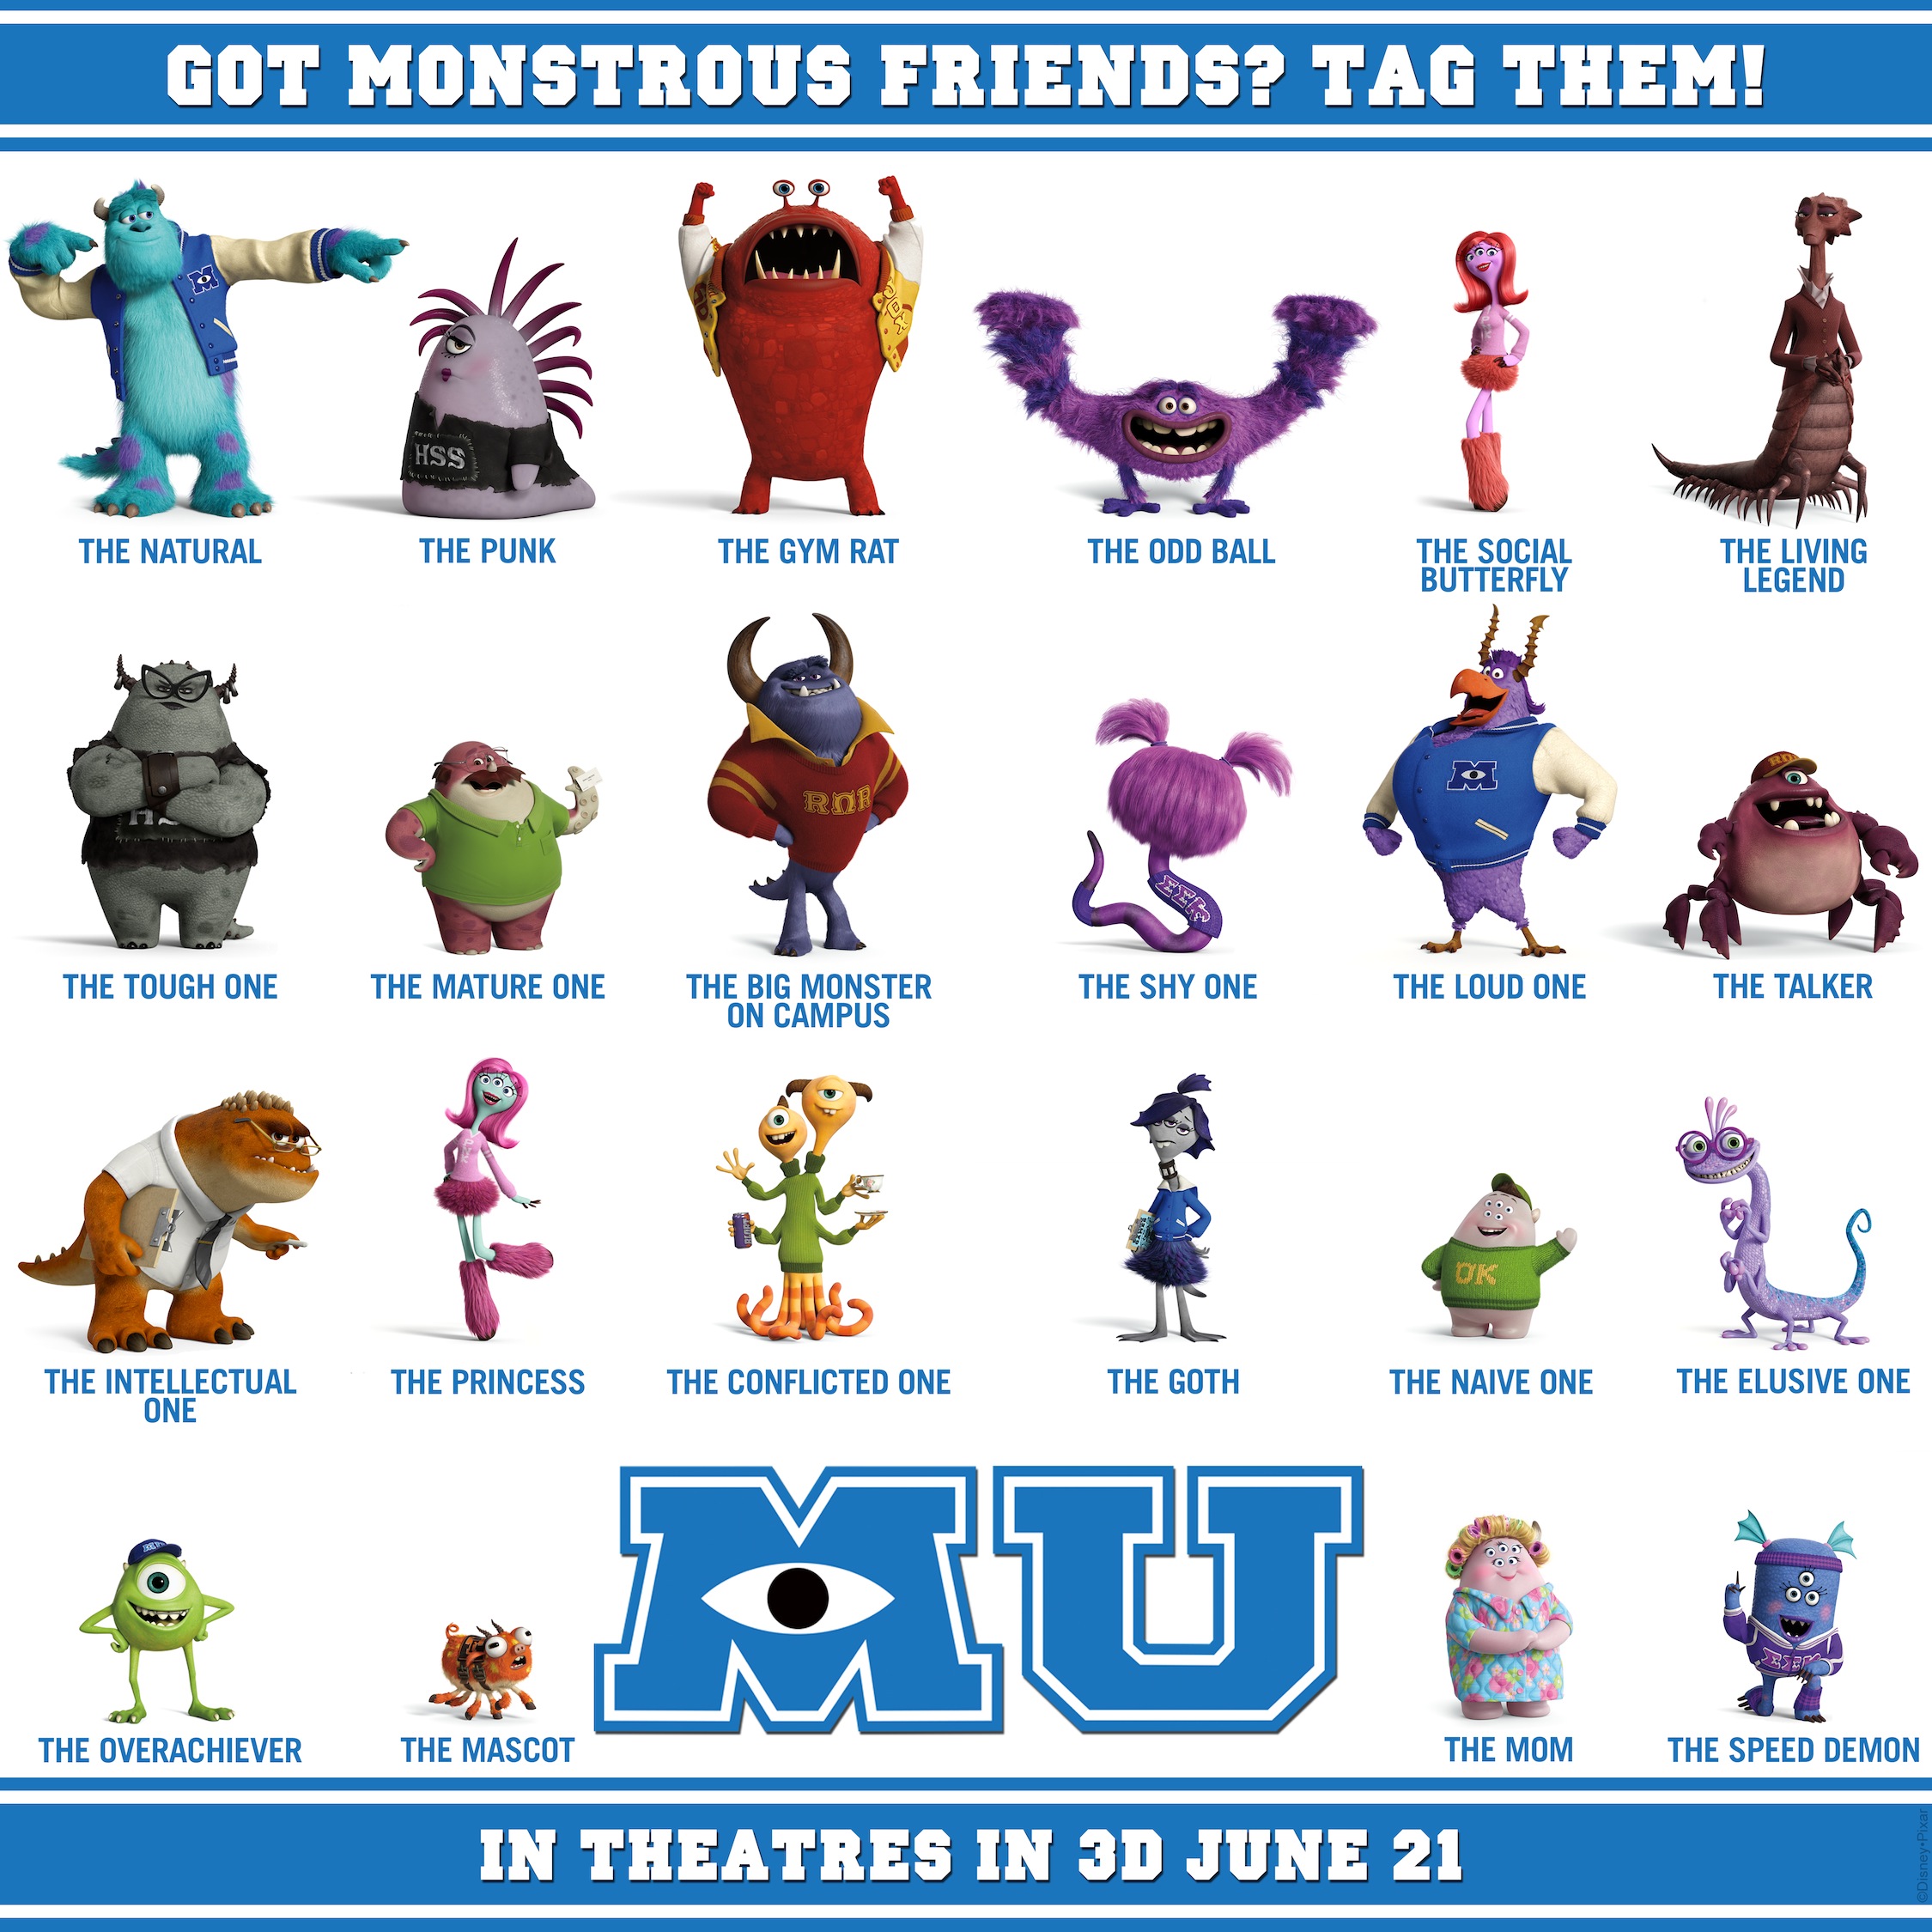 Monsters University, Official Website